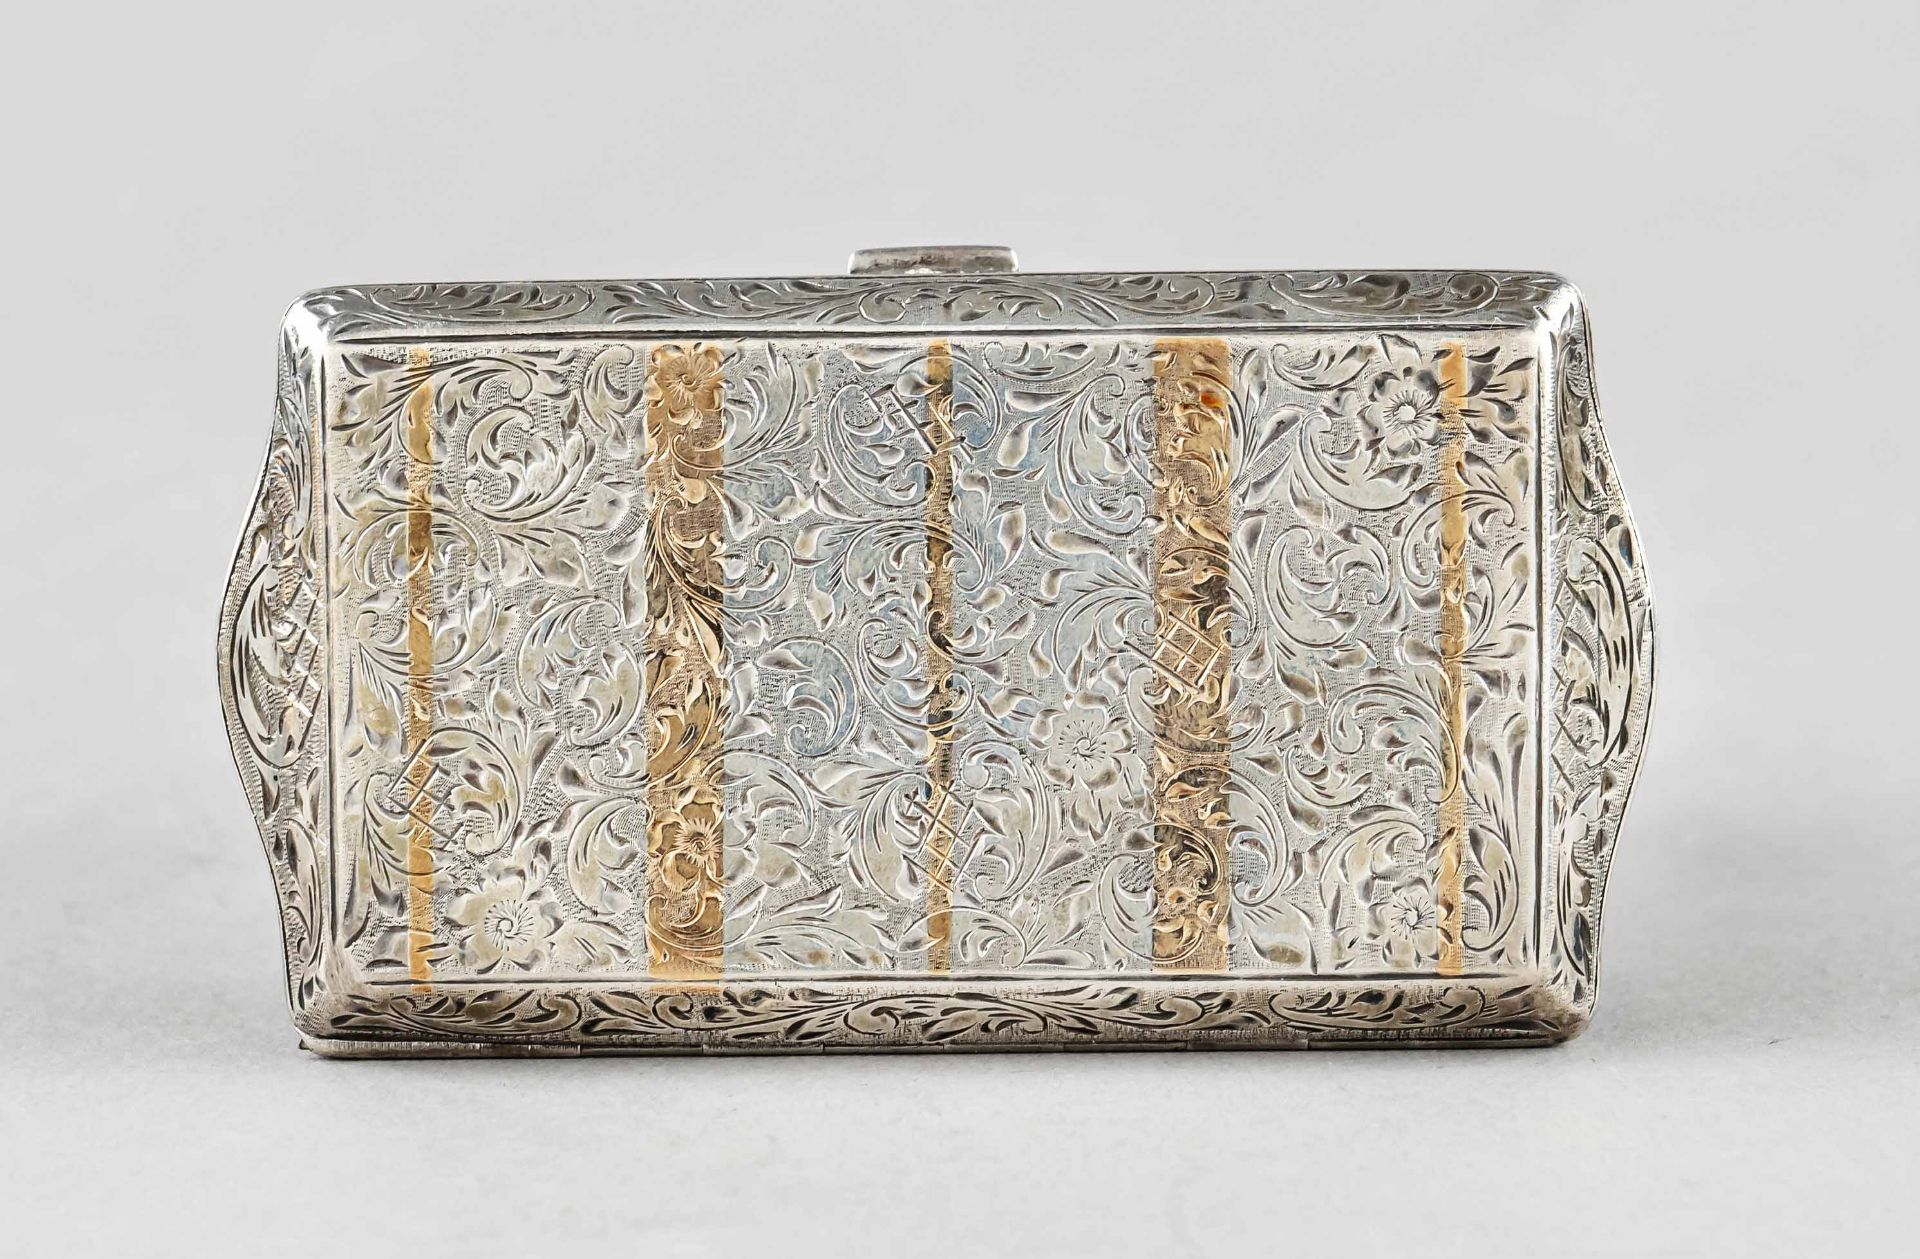 Cigarette case, 20th century, maker's mark K. & W., silver 800/000, rectangular shape, curved on the